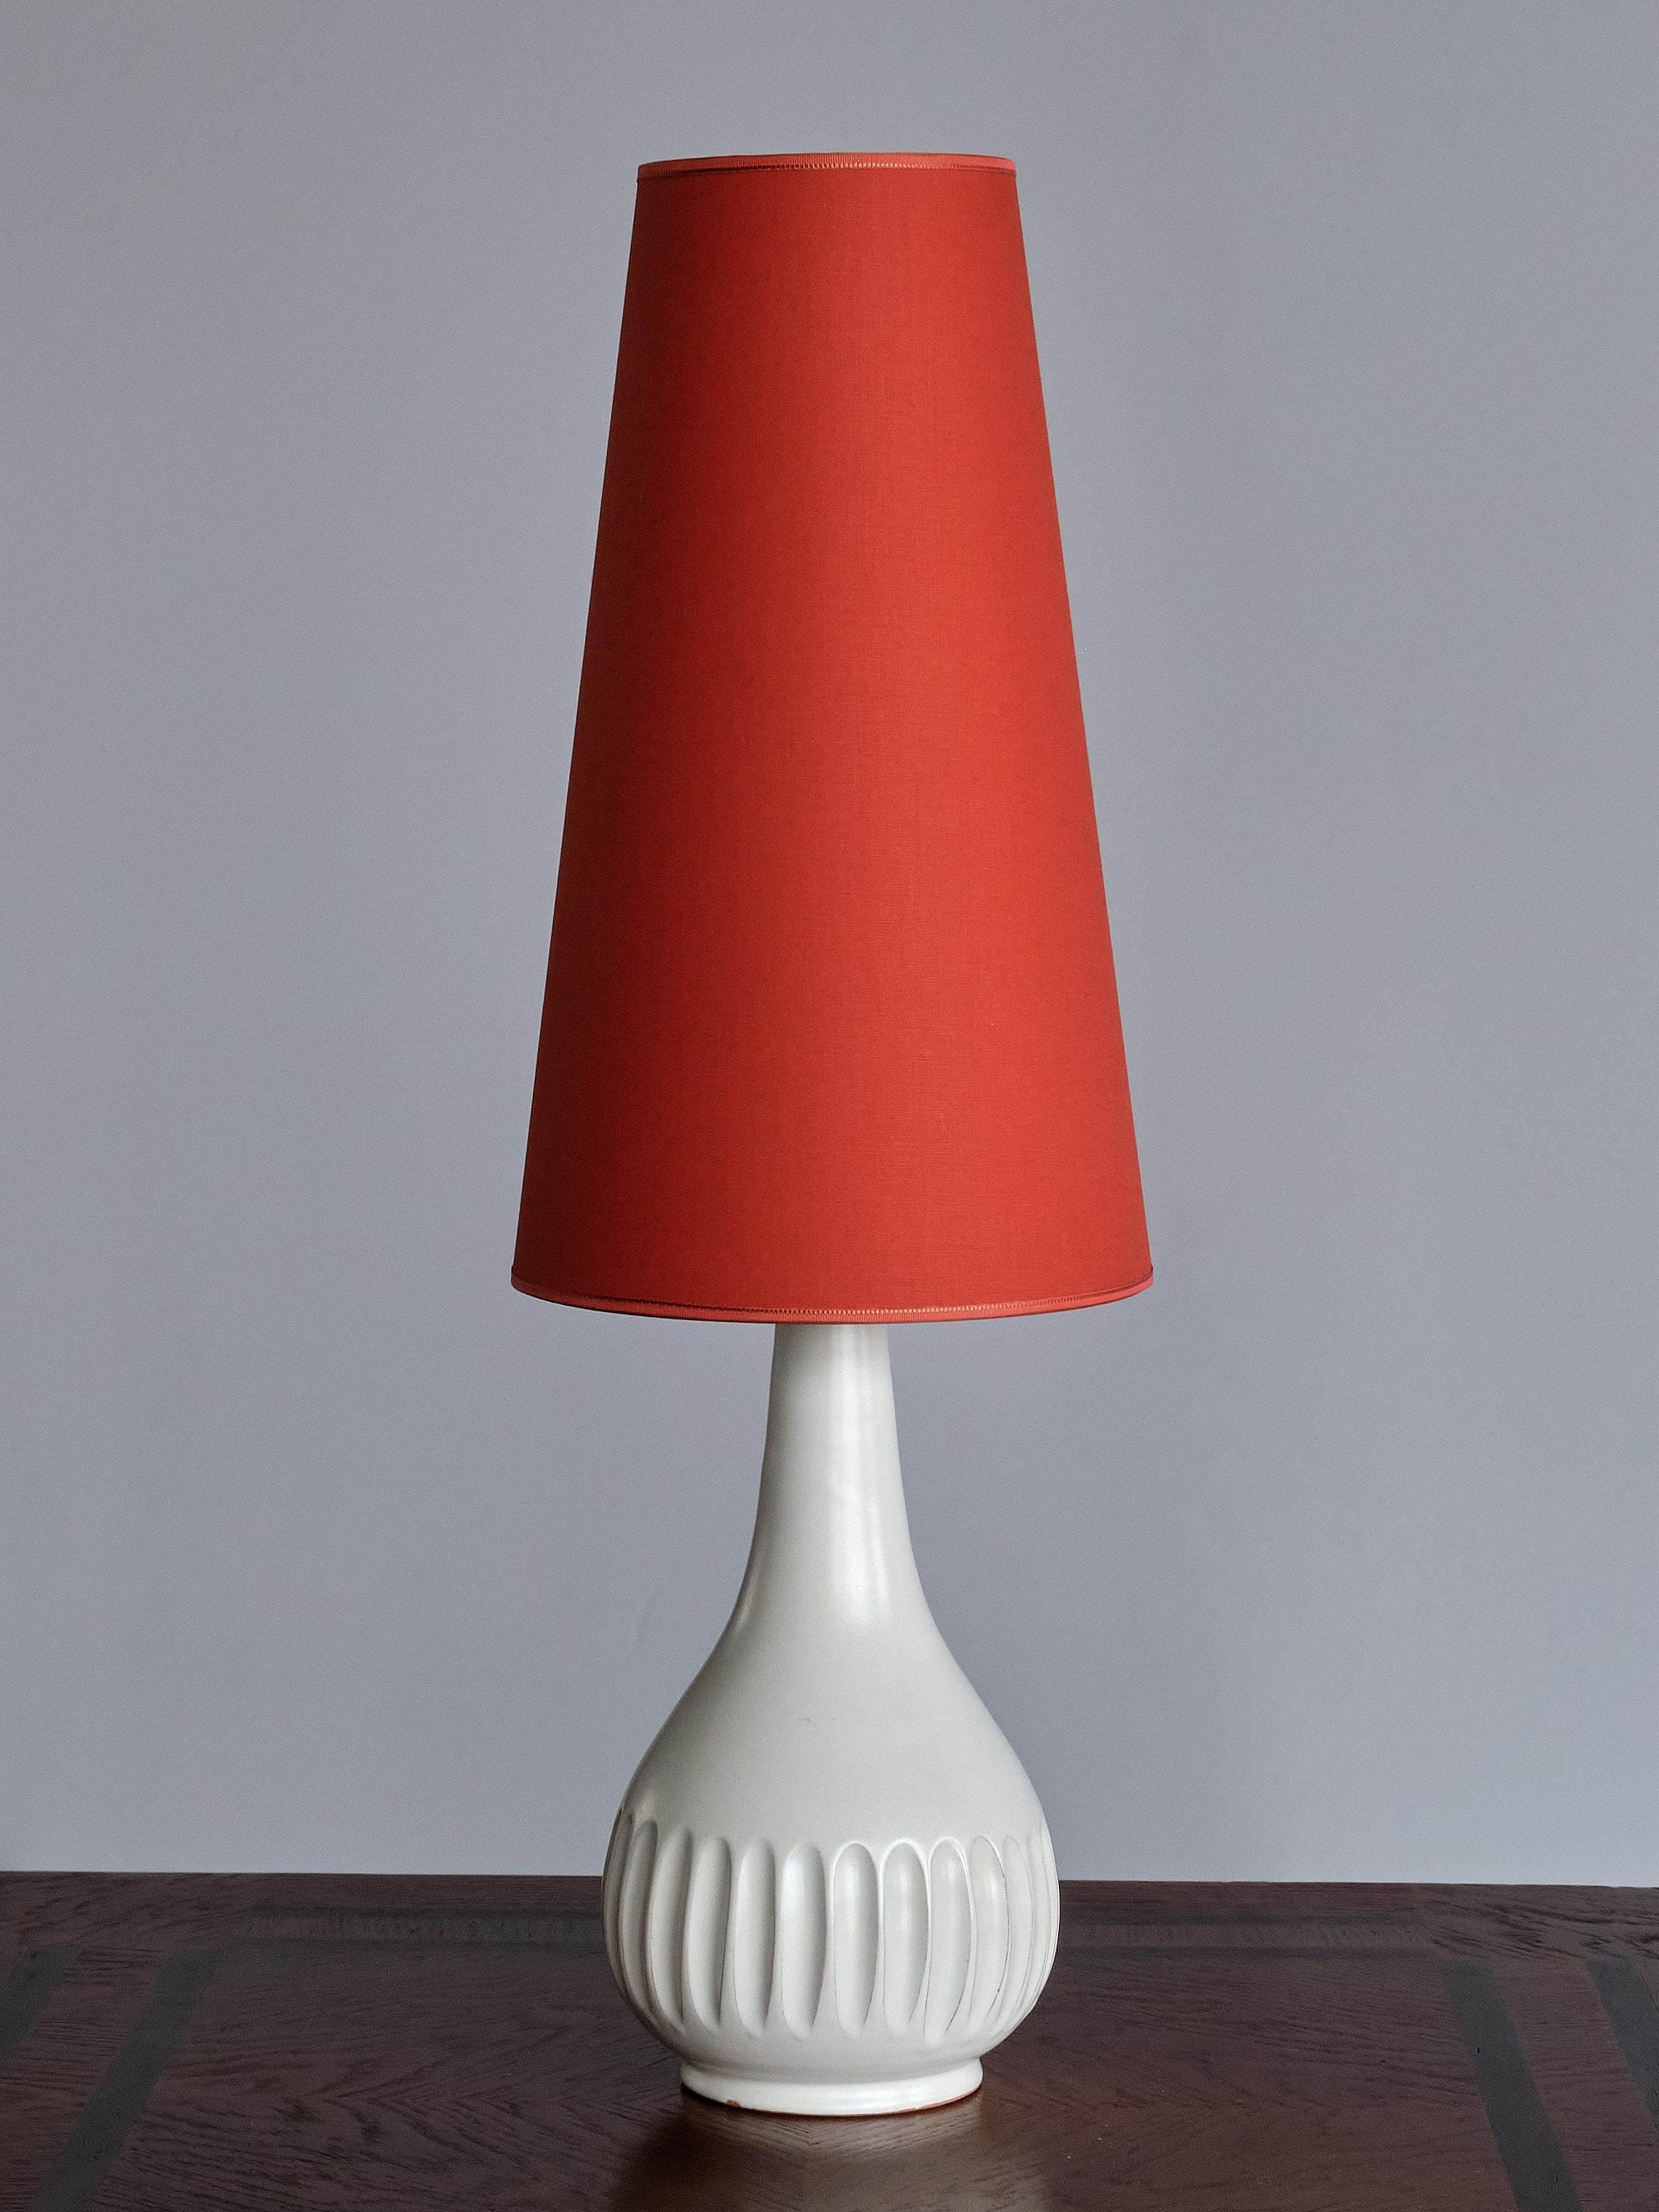 Anna-Lisa Thomson Ceramic Table Lamp, Upsala-Ekeby, Swedish Modern, 1940s For Sale 1